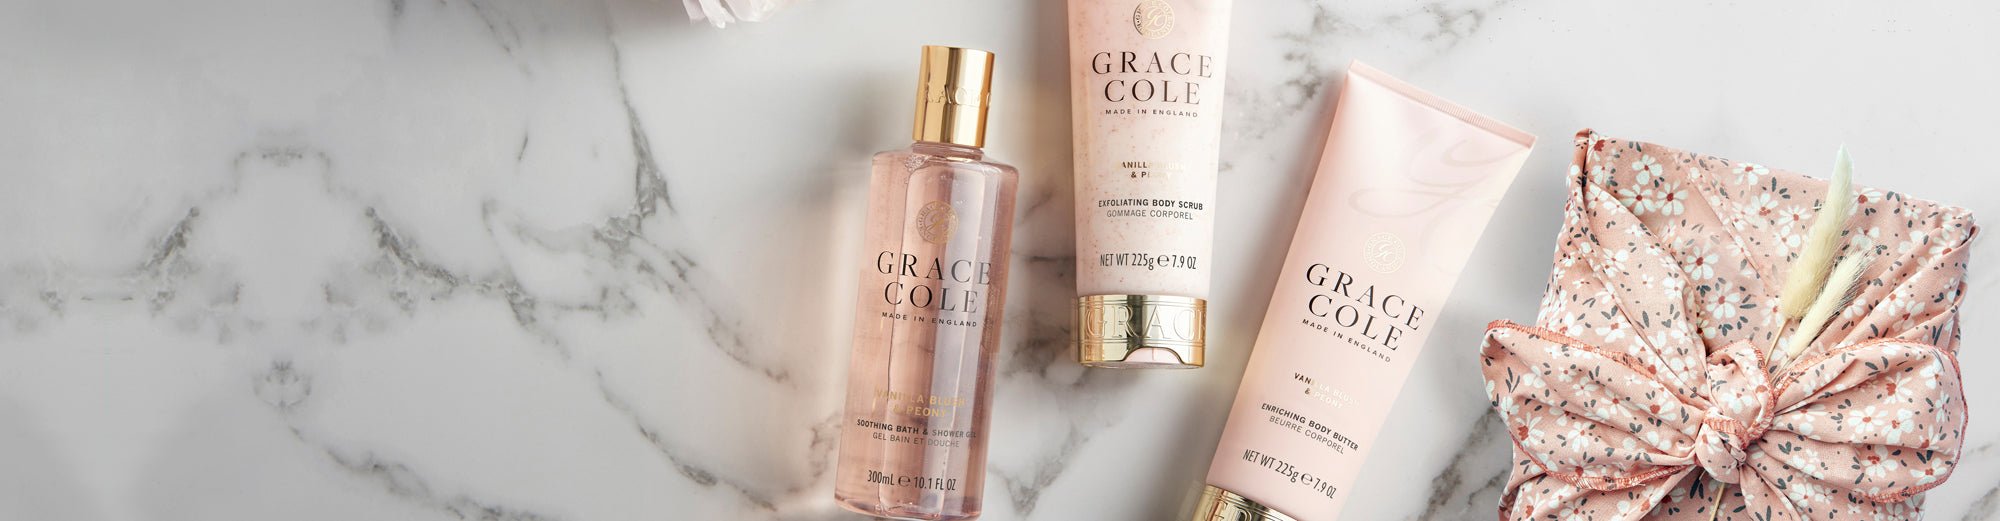 Grace Cole Luxury Gift Sets - Grace Cole Limited